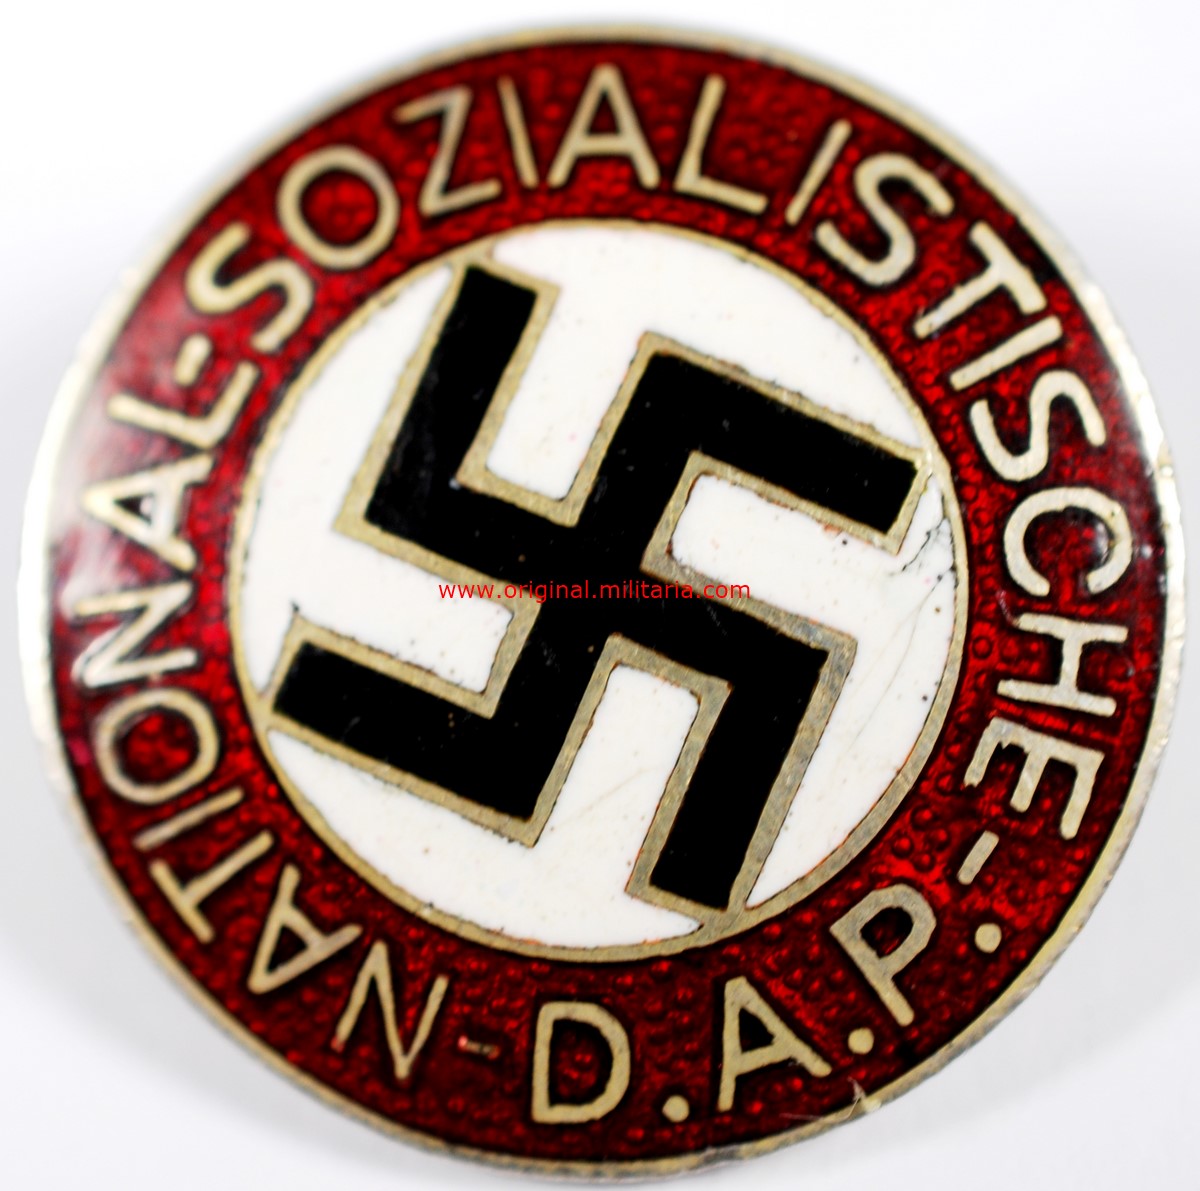 NSDAP/ Insignia Transicional con RZM y Nº 34